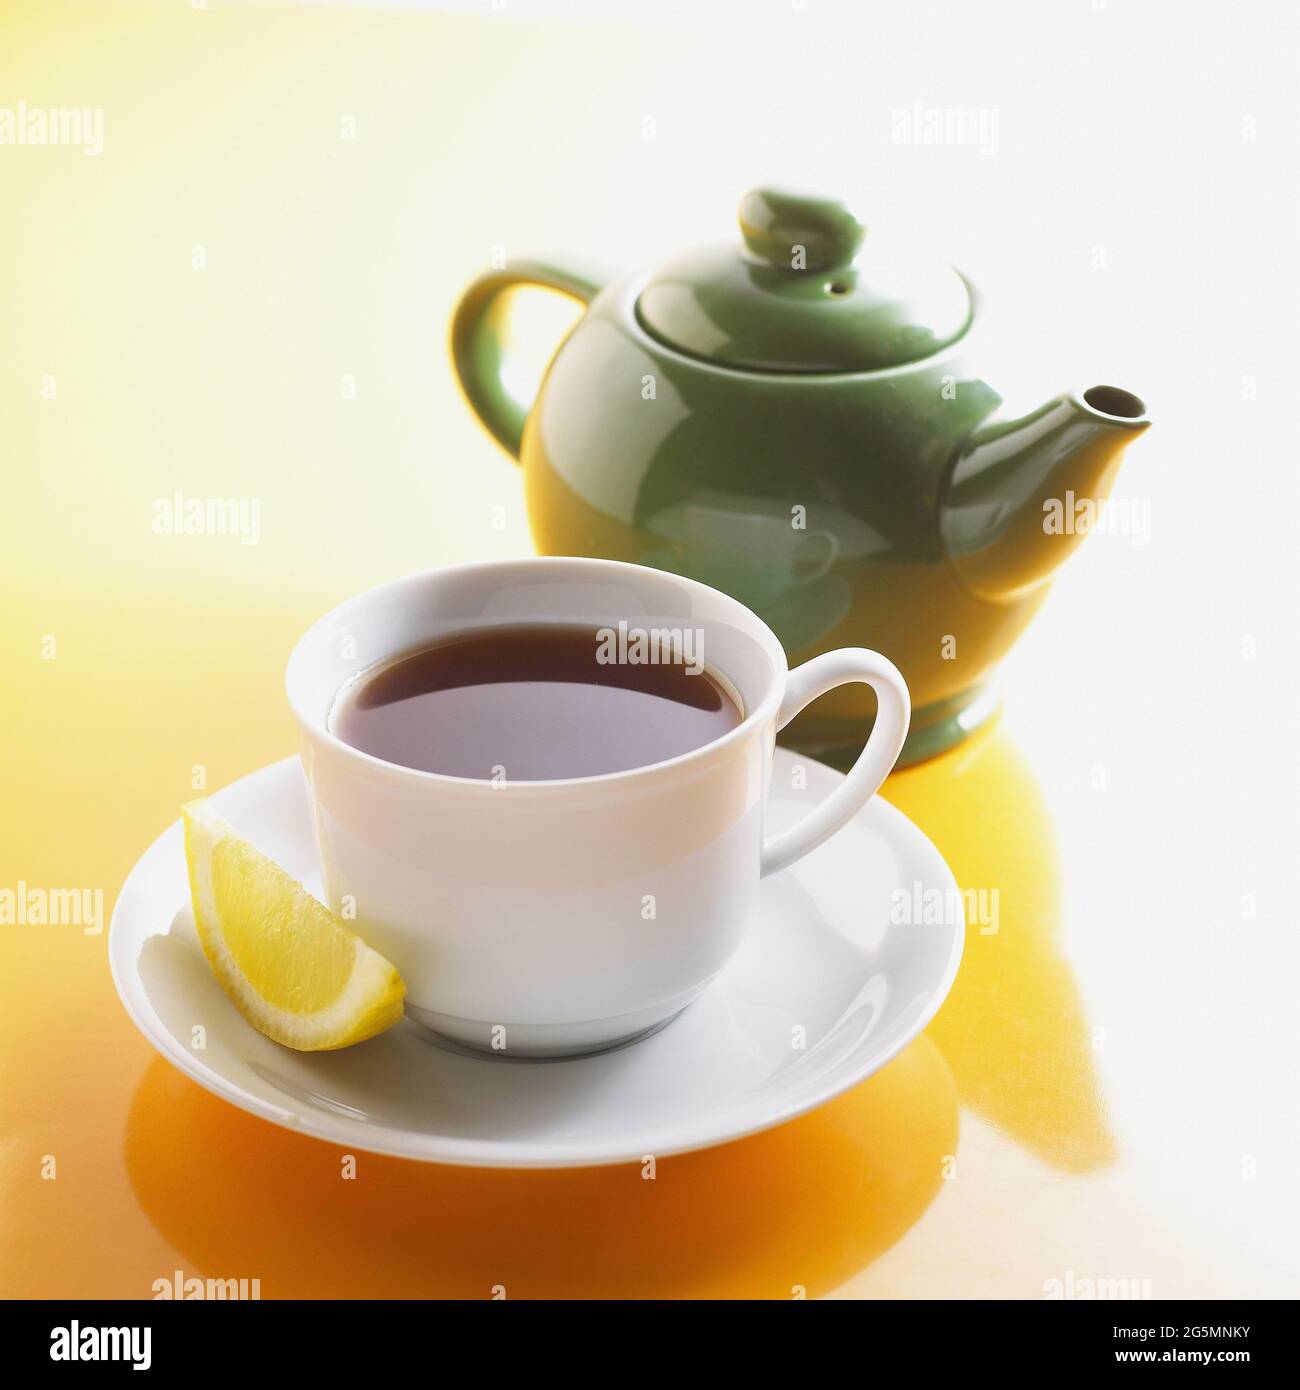 Cup of Tea and Teapot Stock Photo - Alamy